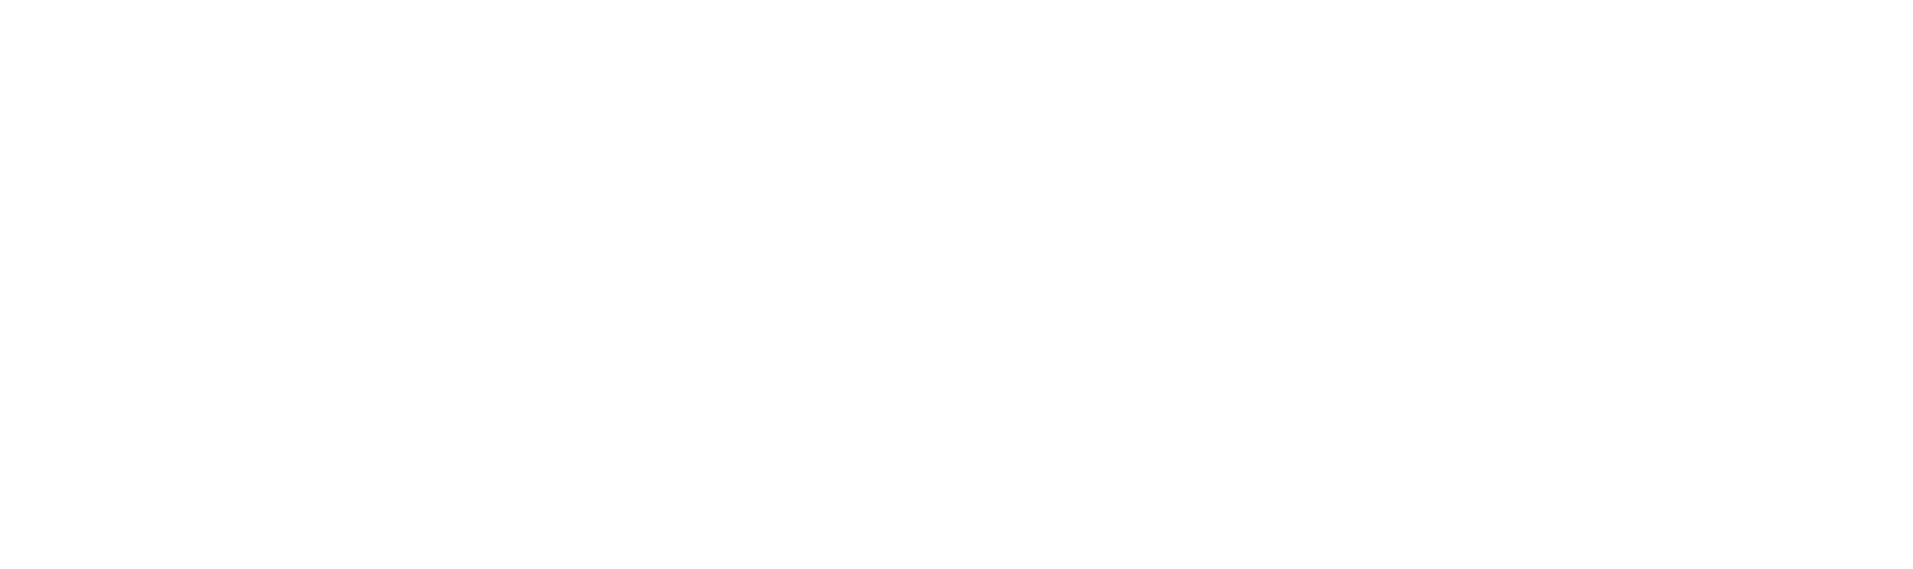 Jones & Associates Premier Financial Solutions